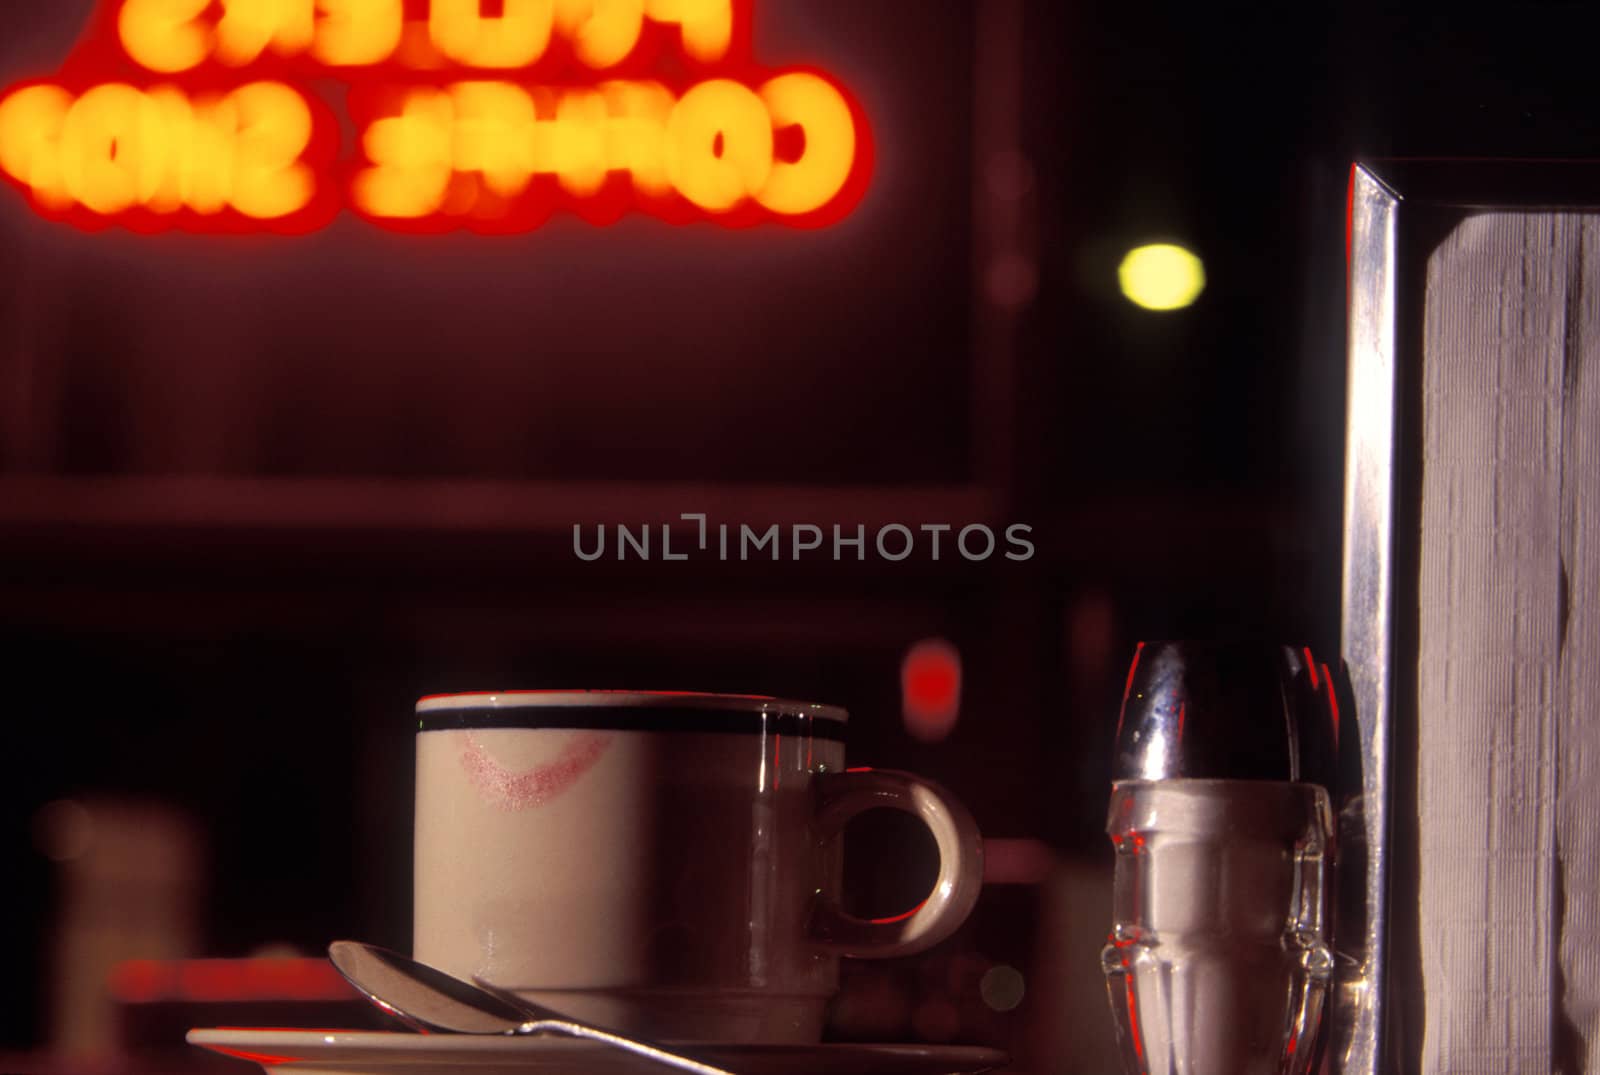 Diner at night, closeup of coffee mug with lipstick kiss